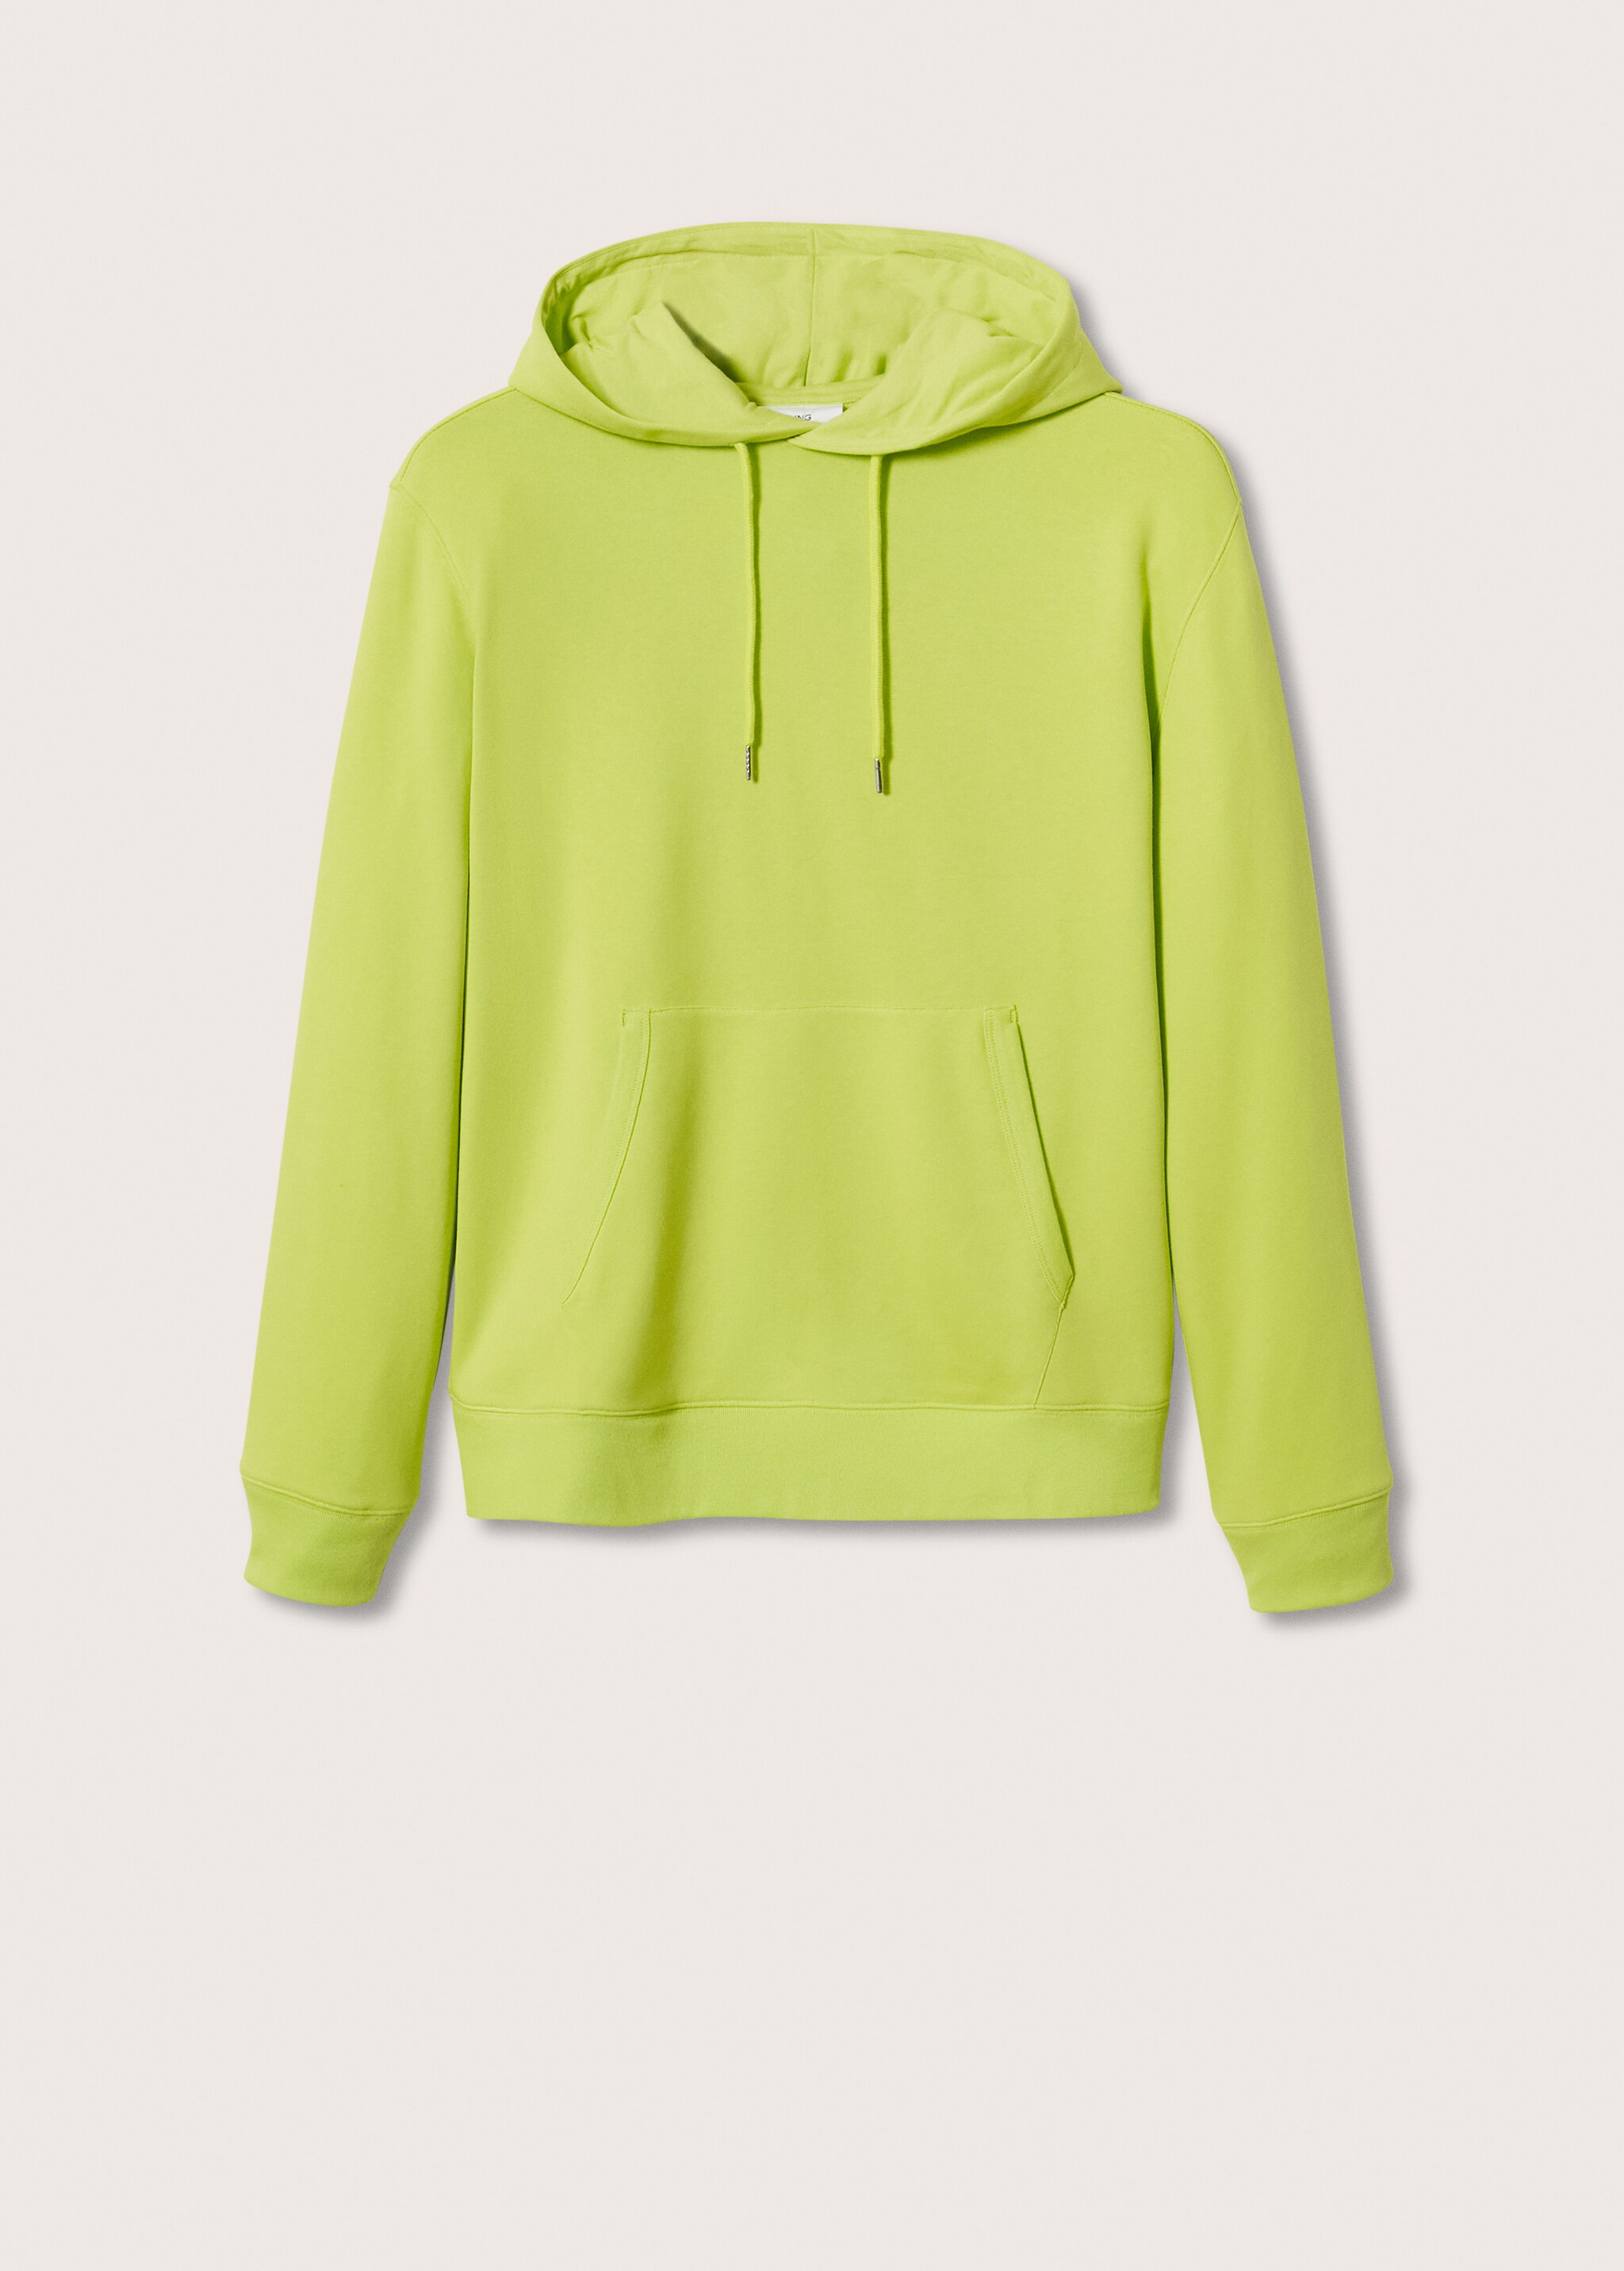 Basic light hooded sweatshirt - Article without model